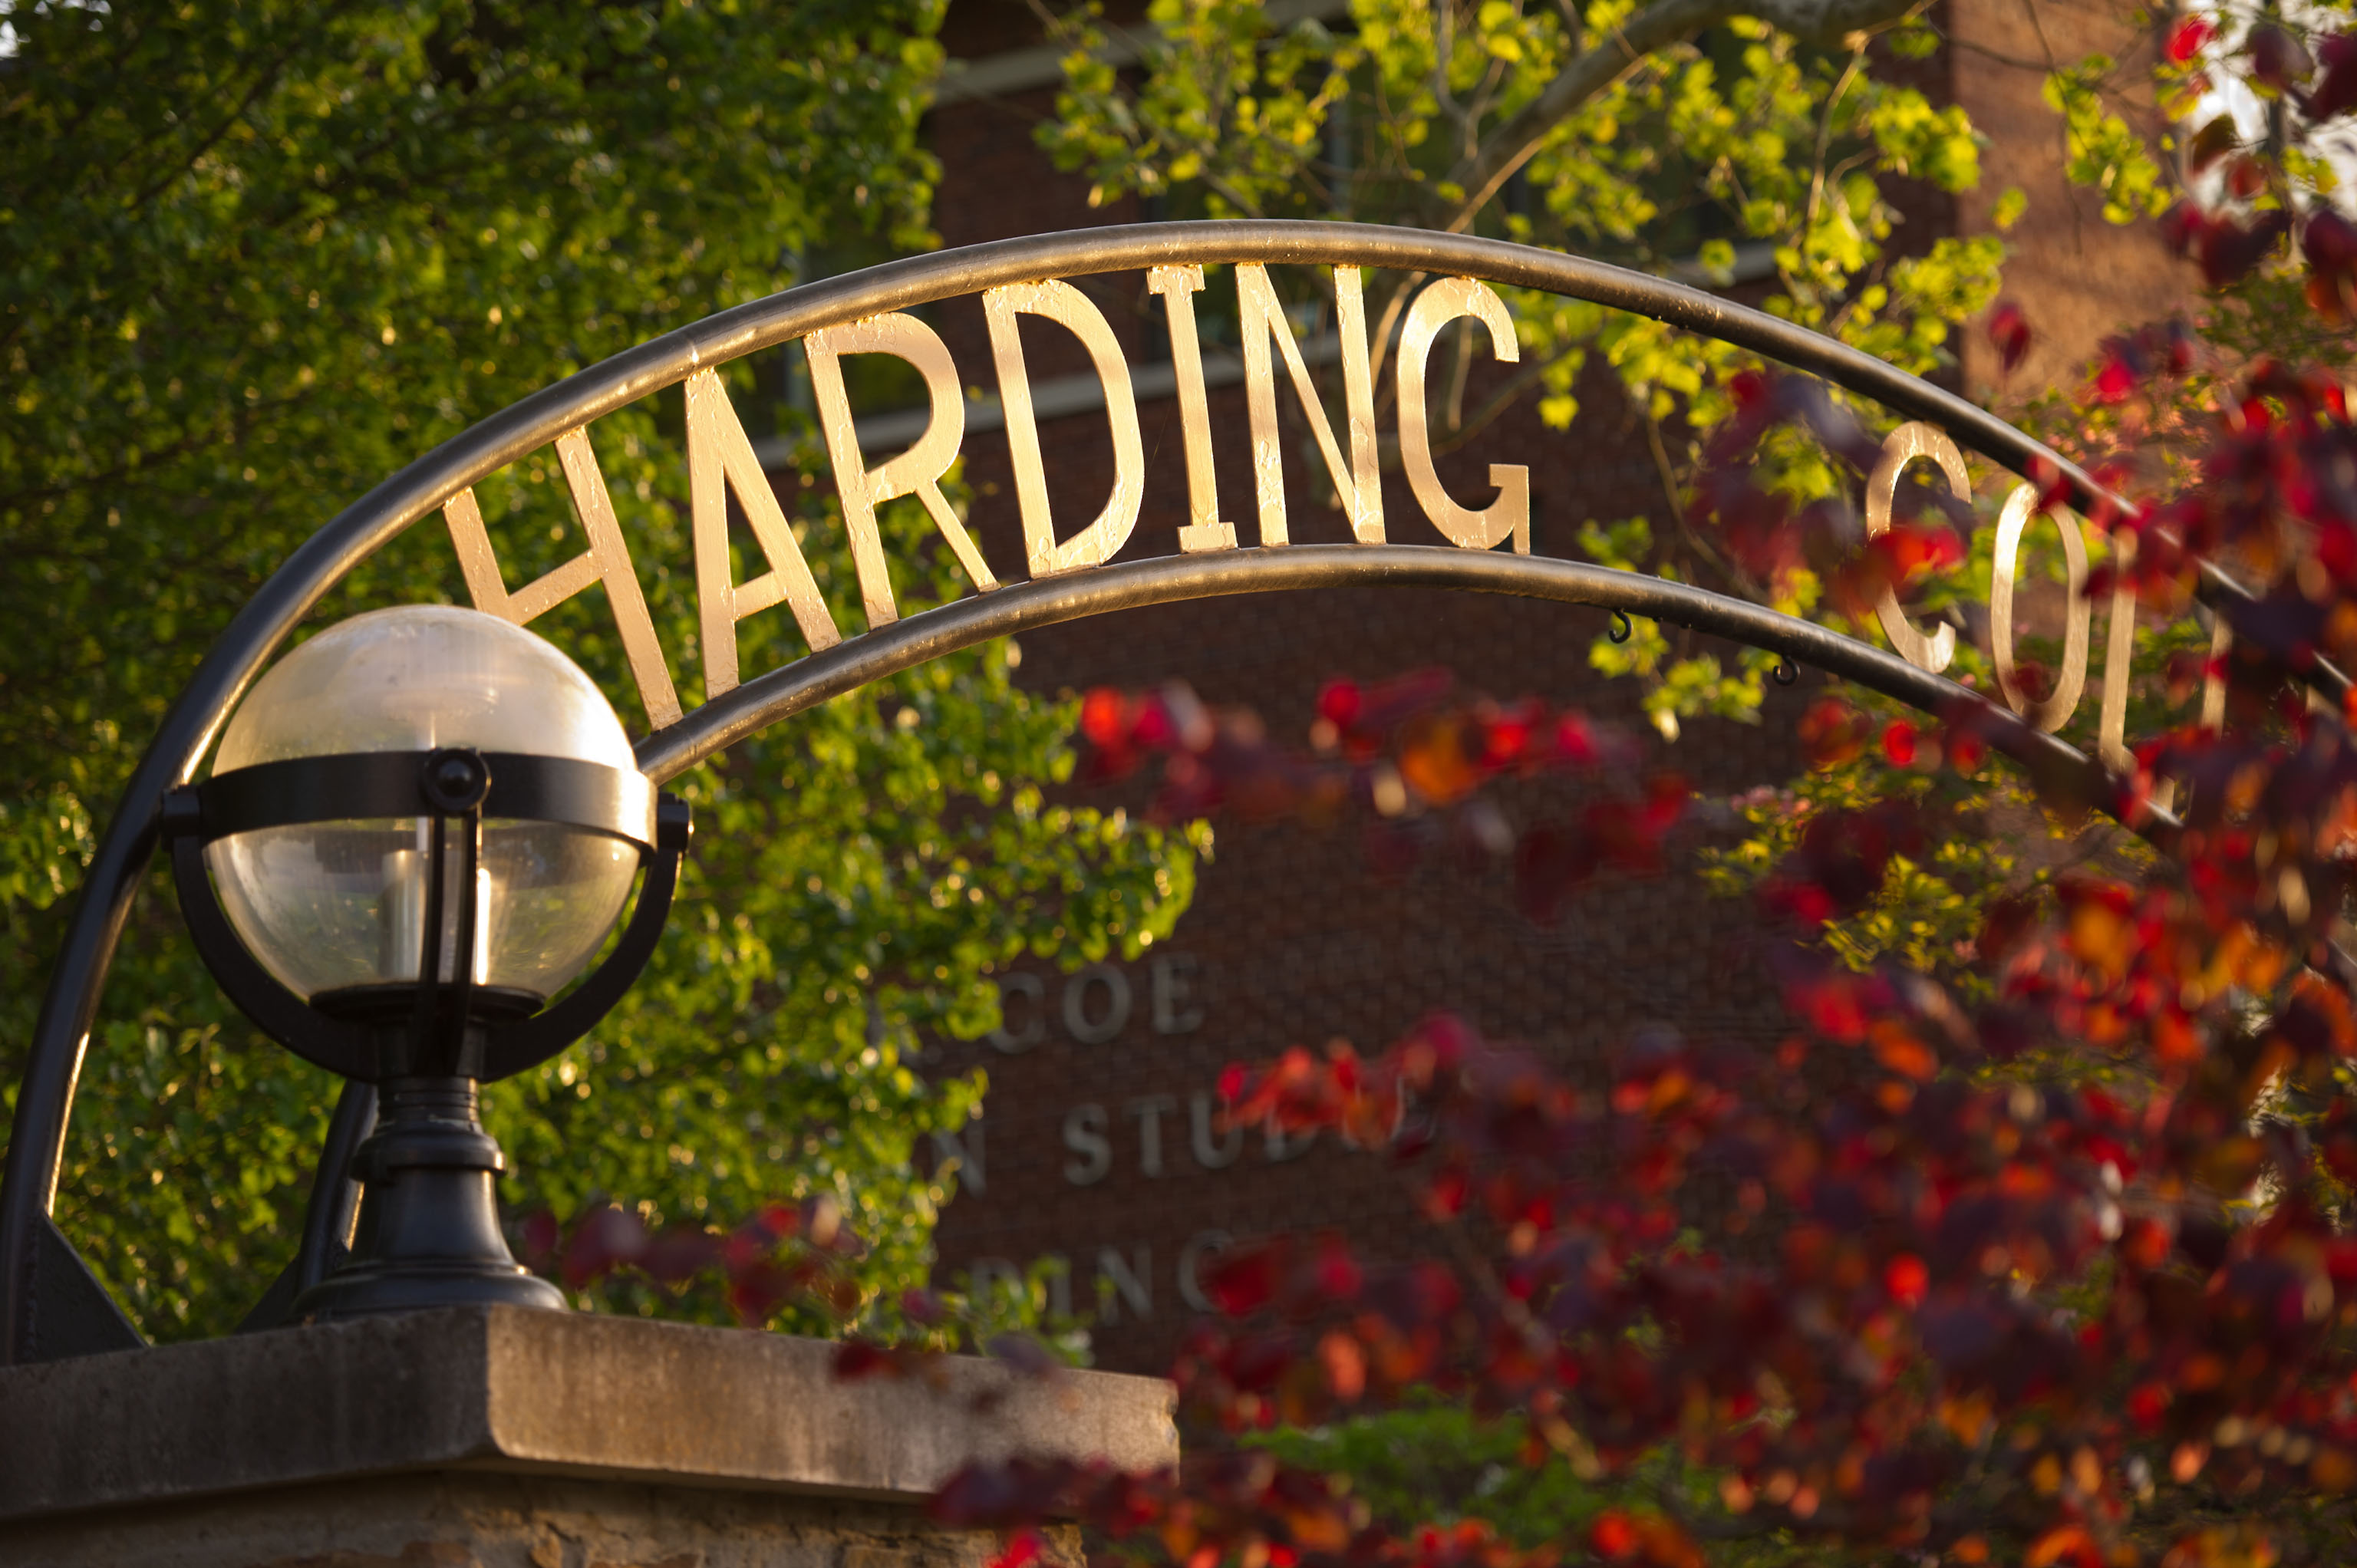 Harding-University.jpg